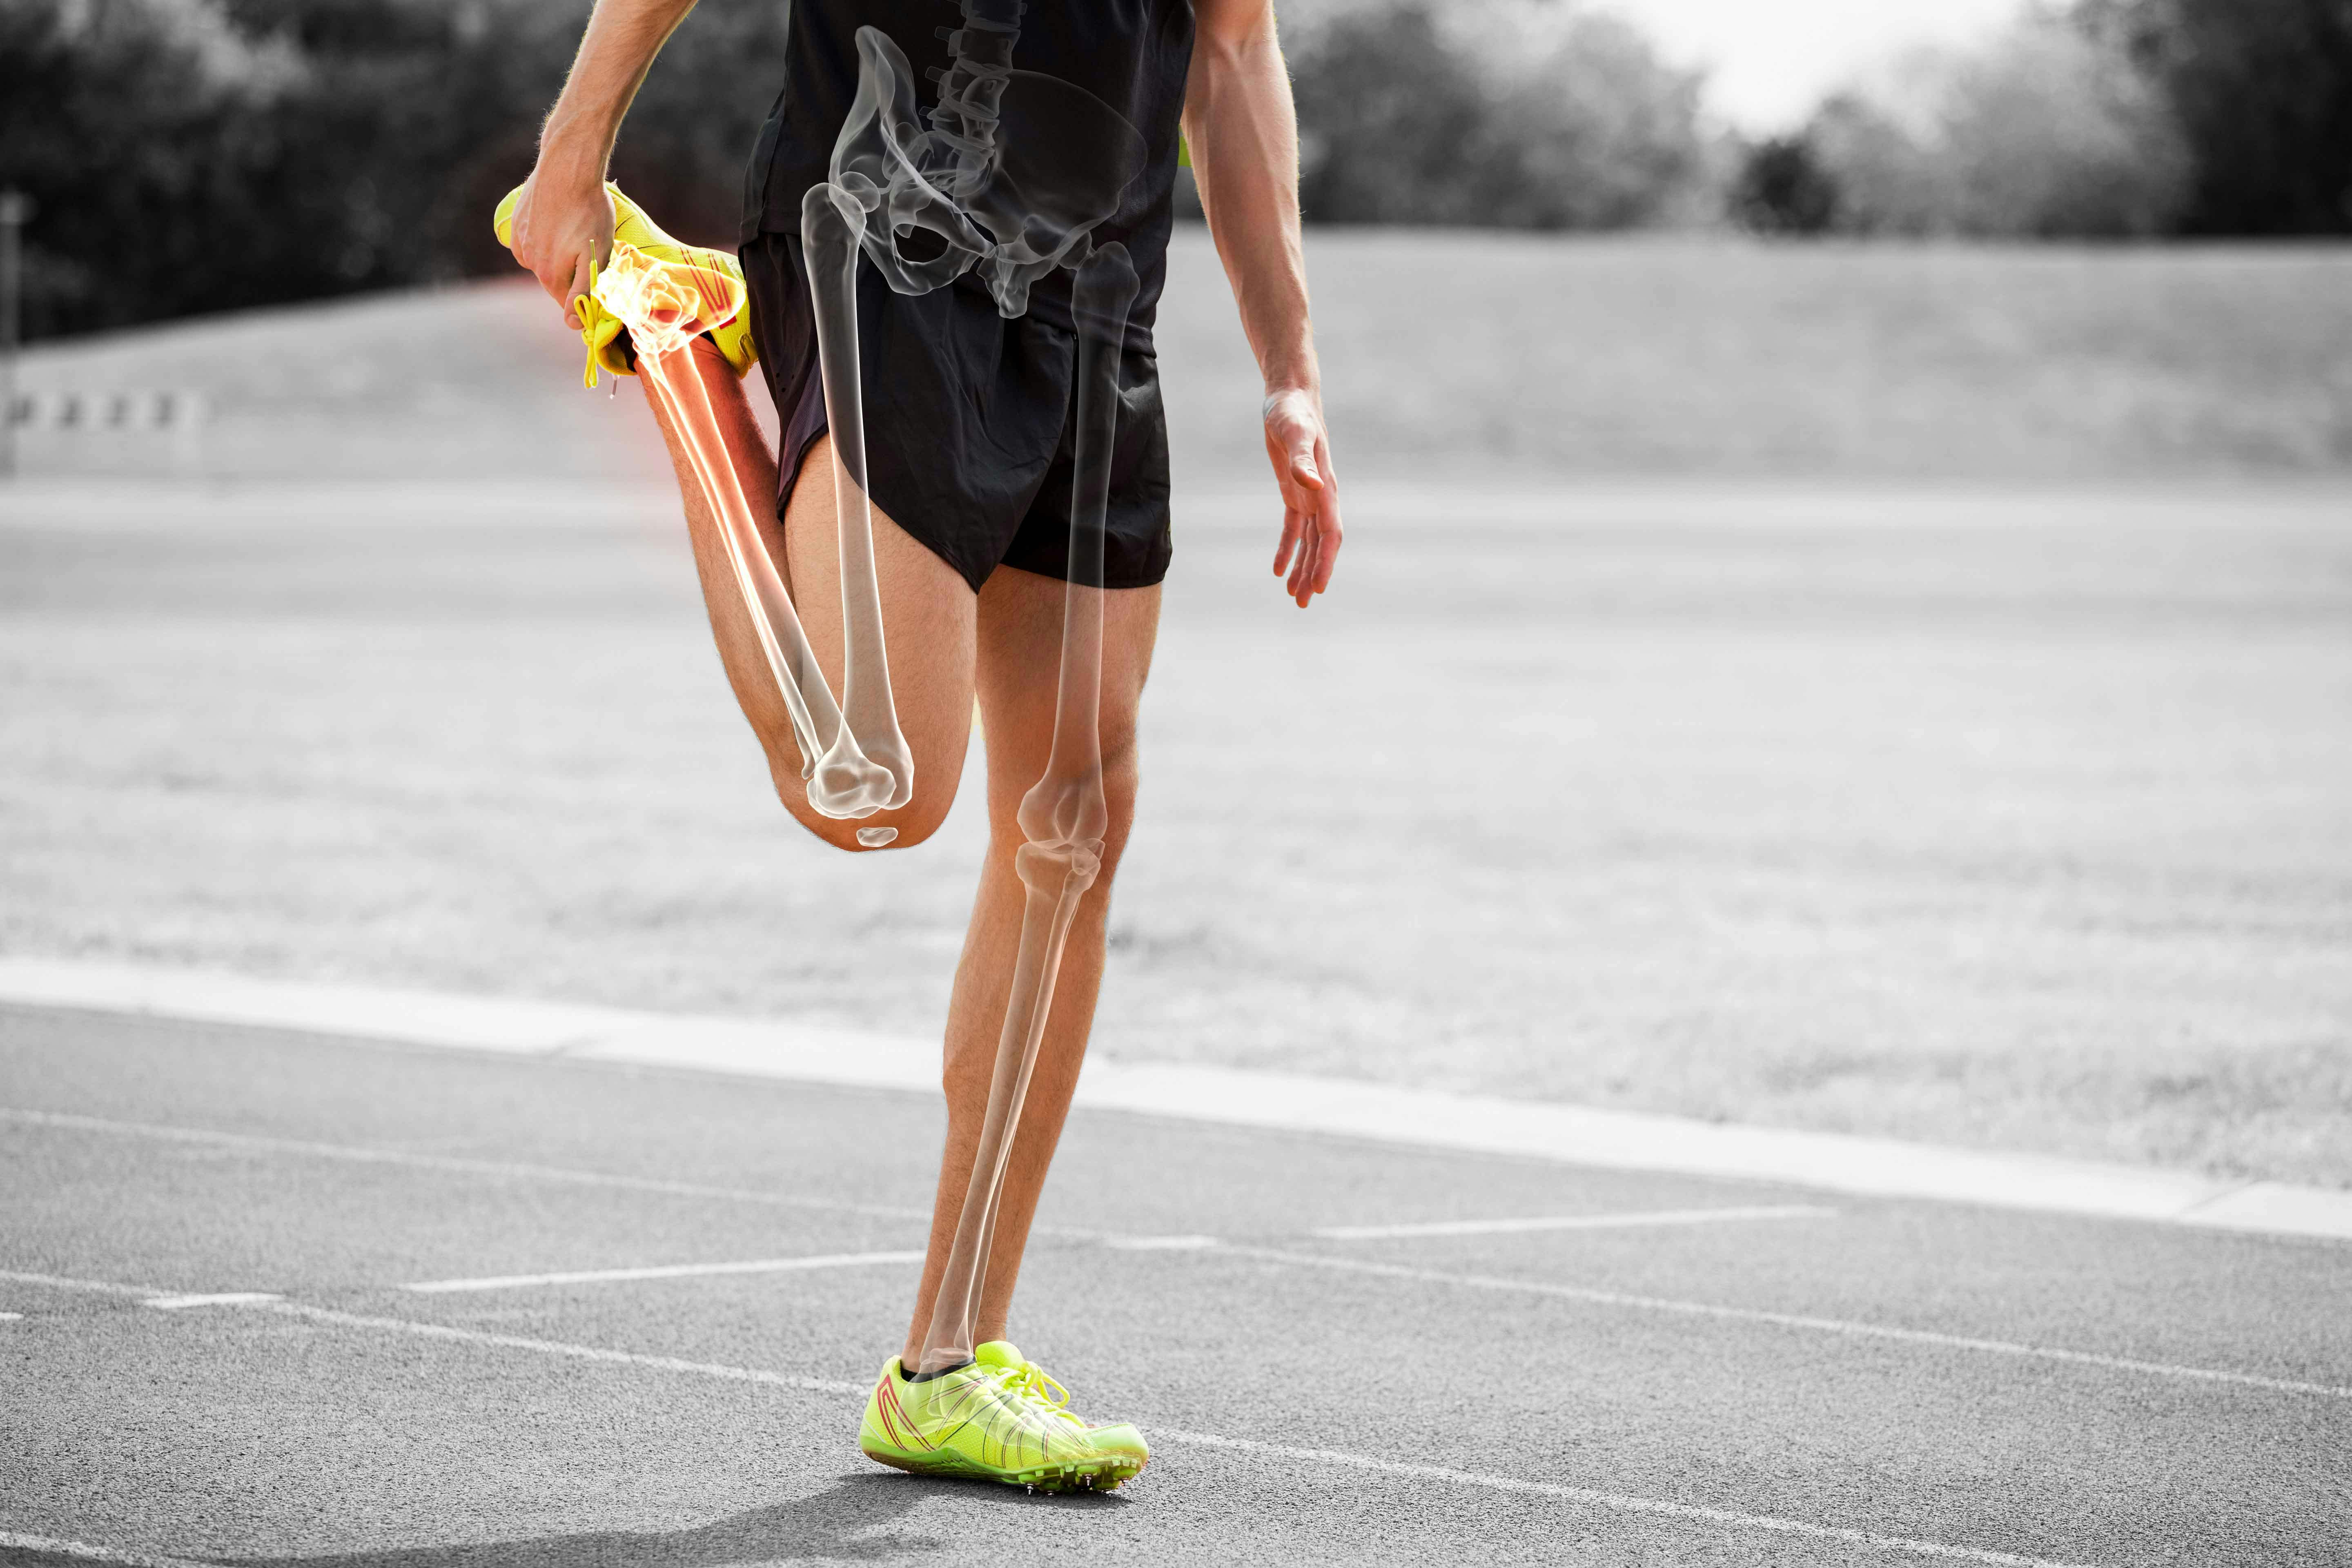 Male runner stretching his leg with skeleton overlay showing leg bones